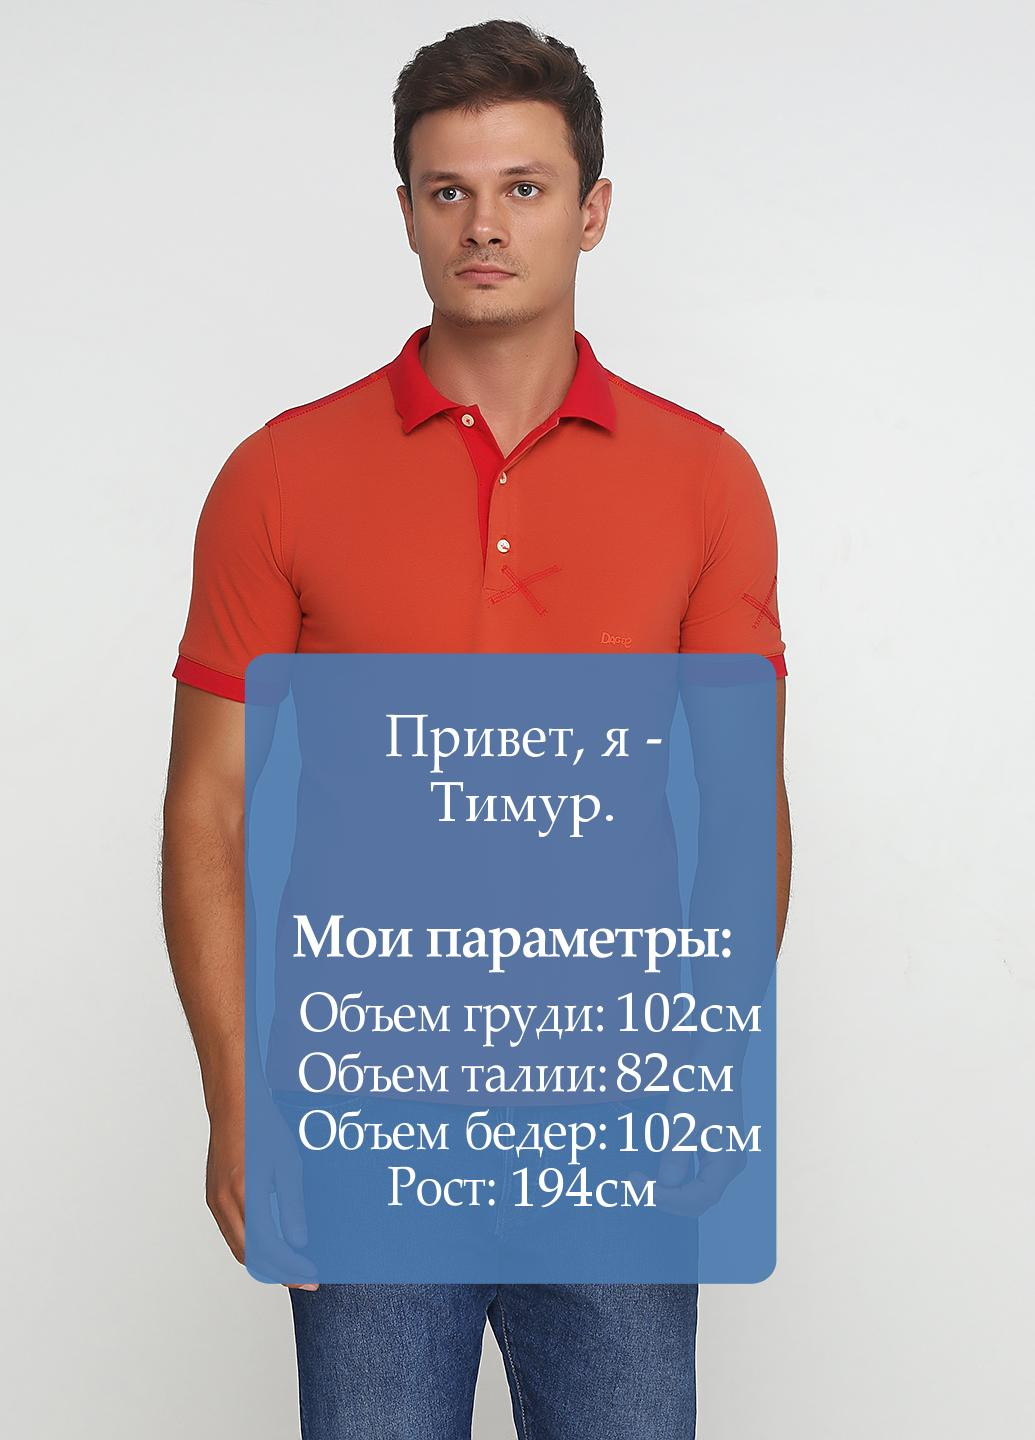 Оранжевая футболка-поло для мужчин Daggs однотонная